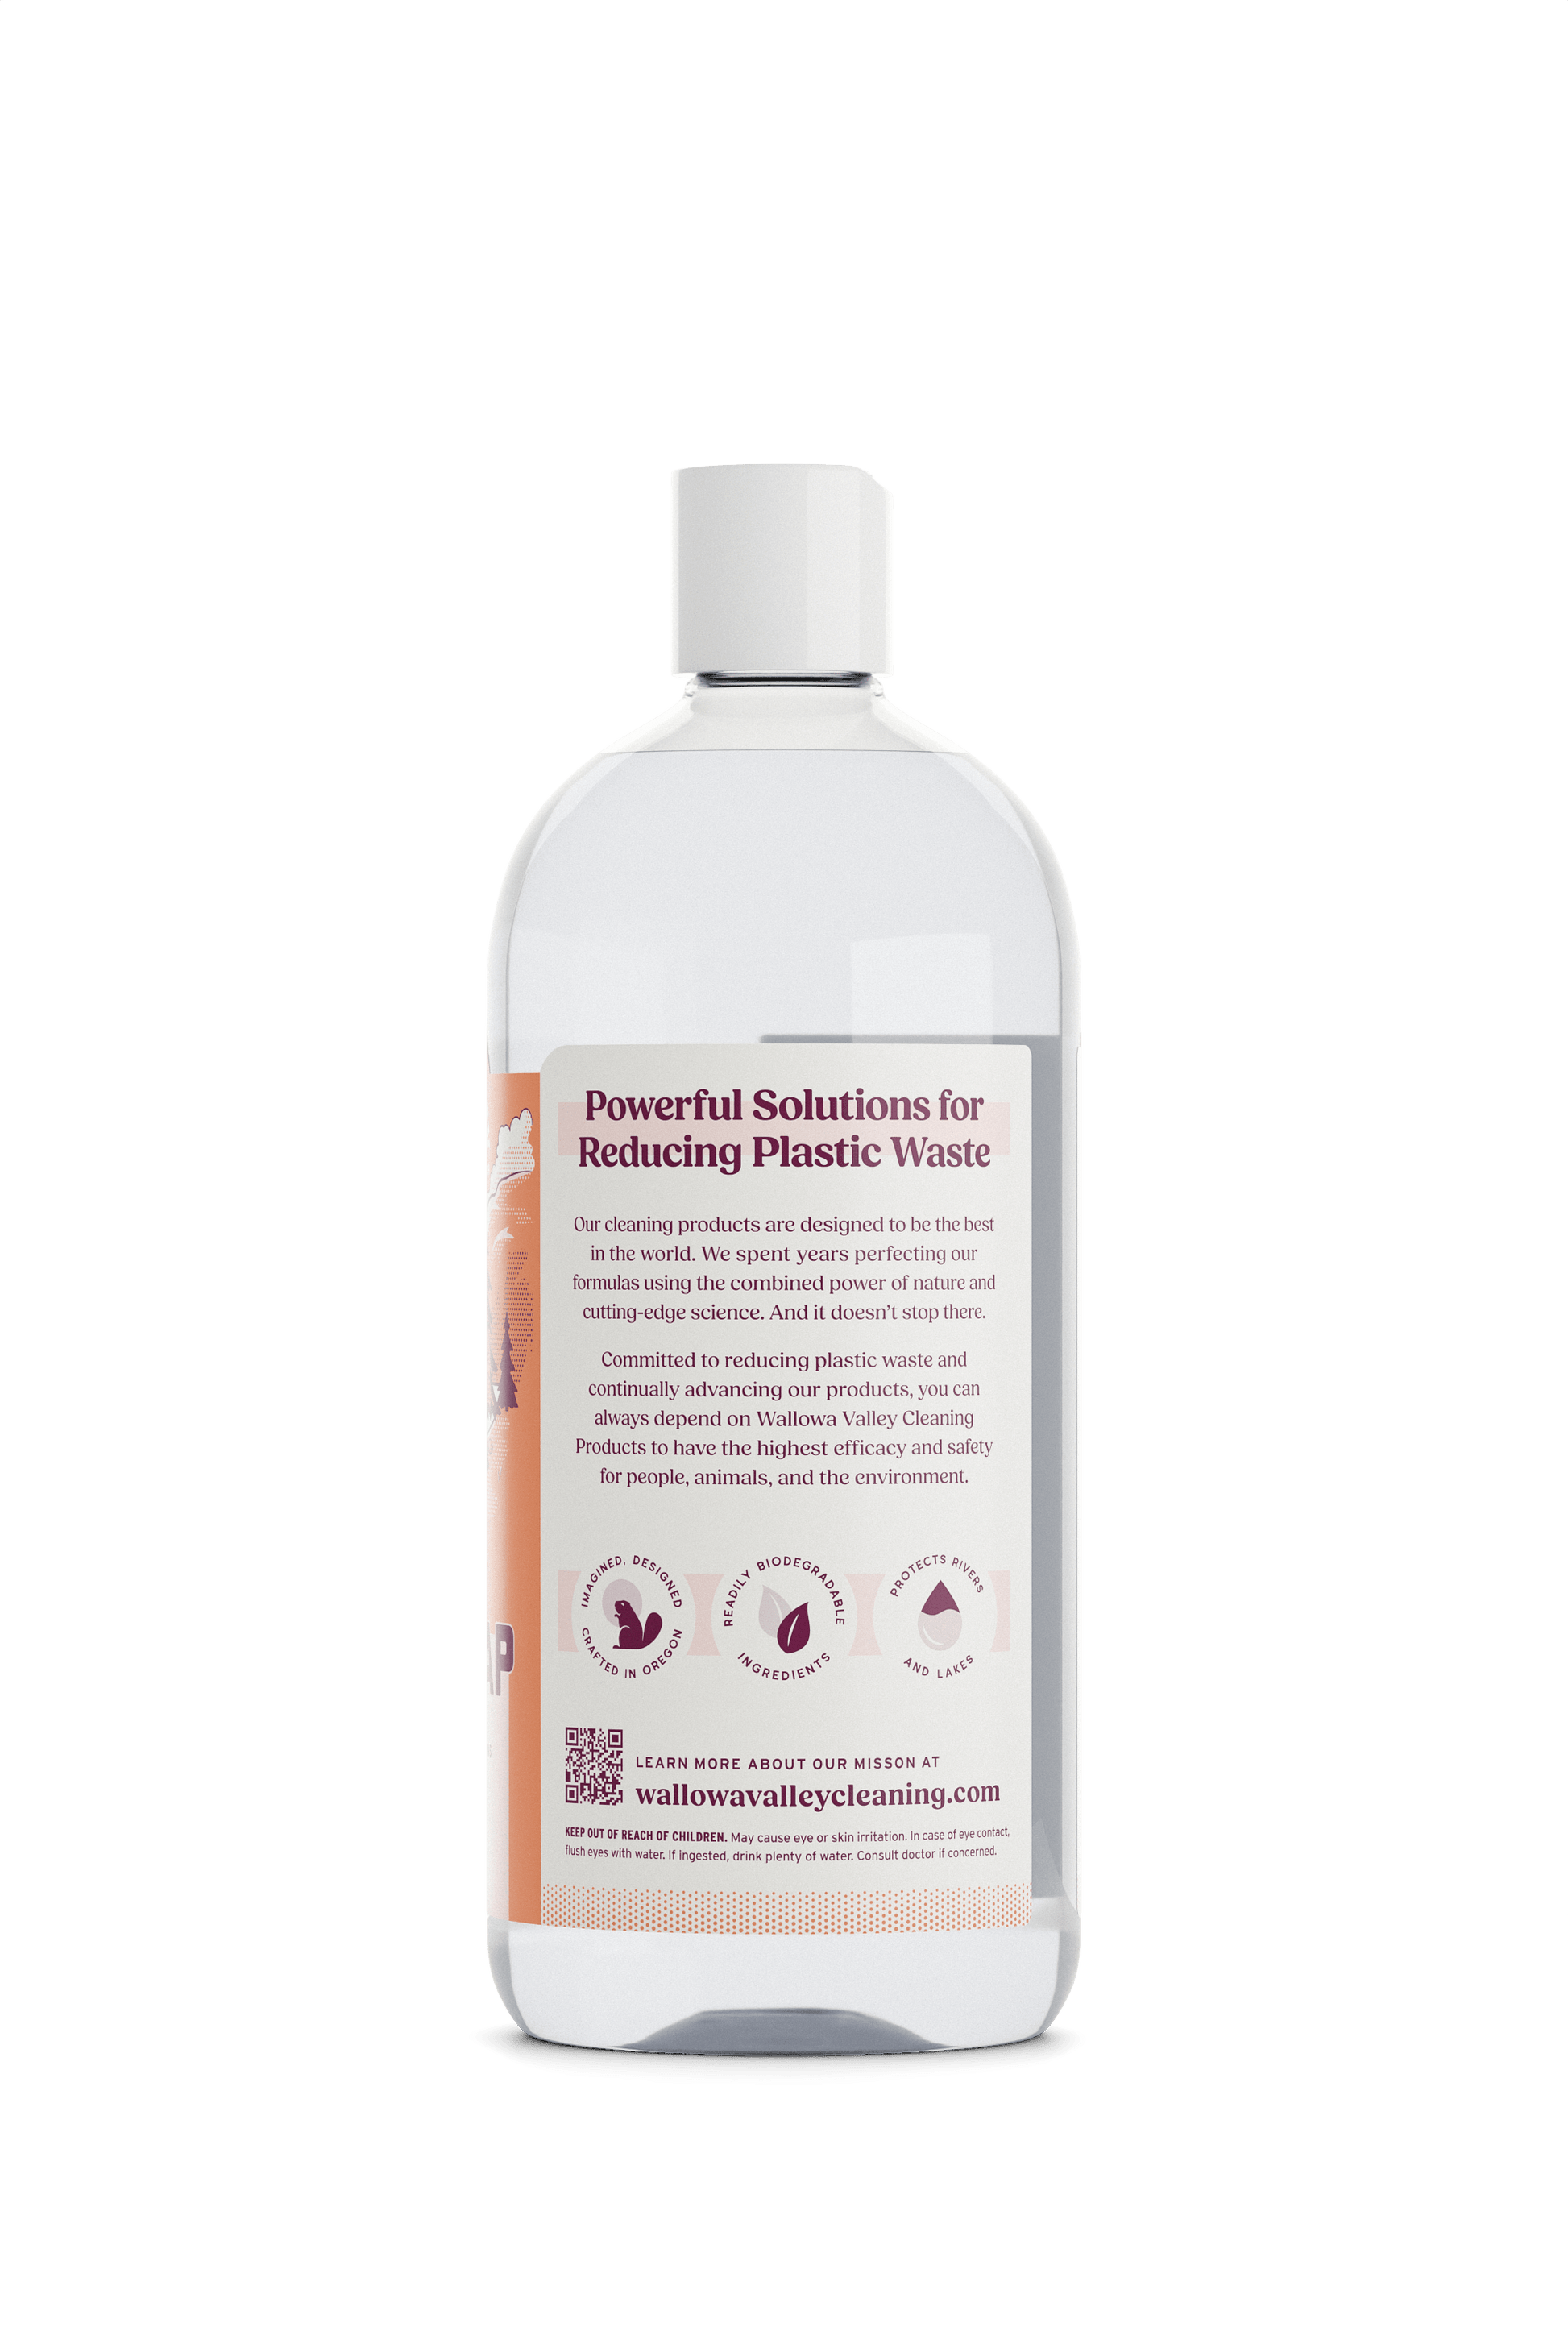 Sparkle Clean Dishwashing Liquid 32 oz + Tangerine Clean Multipurpose